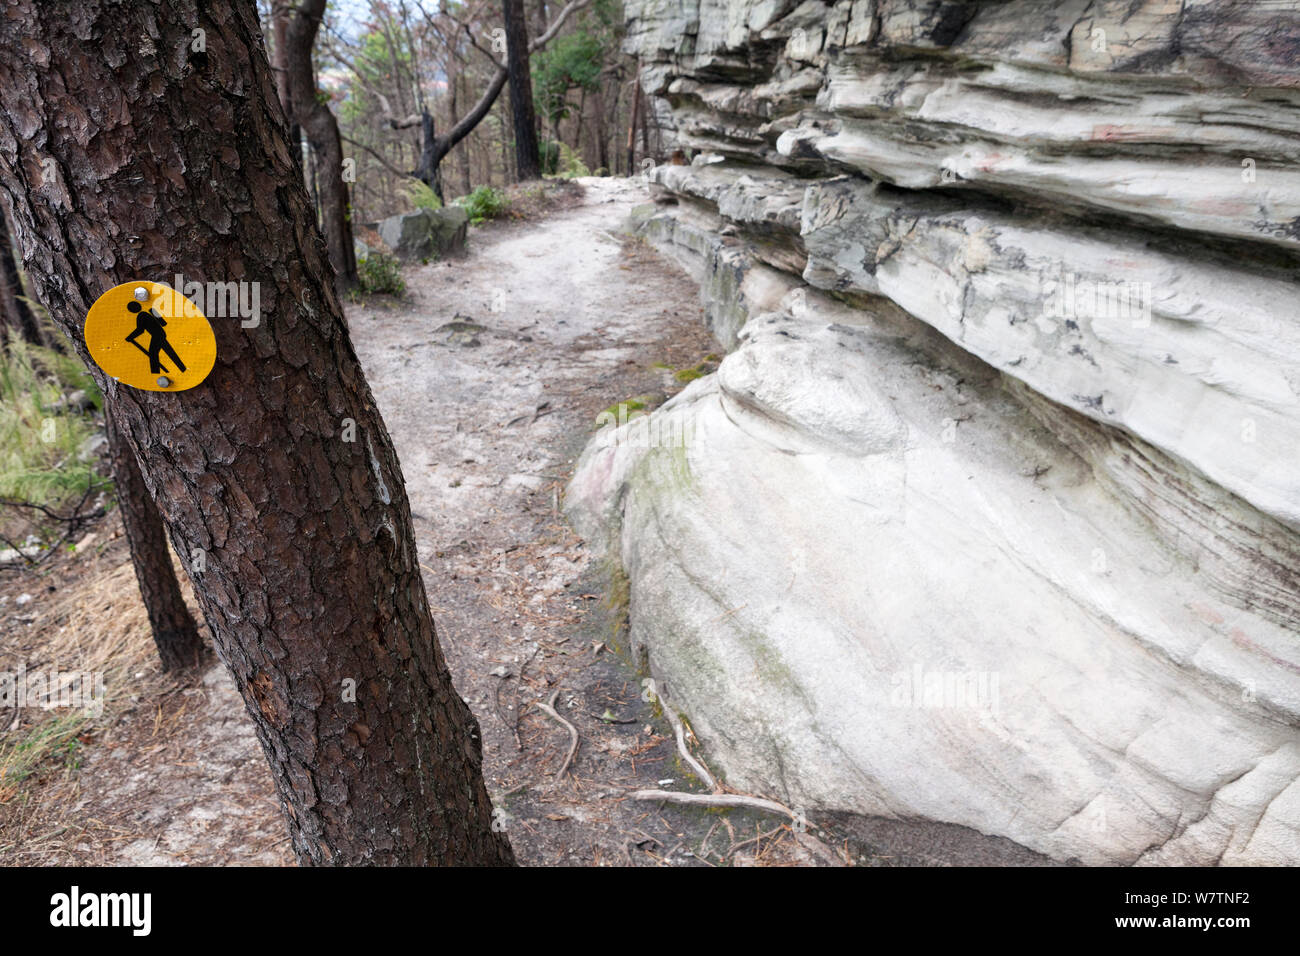 Trail marker walking sign along the Jomeokee Trail, Pilot Mountain State Park. North Carolina, USA, October 2013. Stock Photo